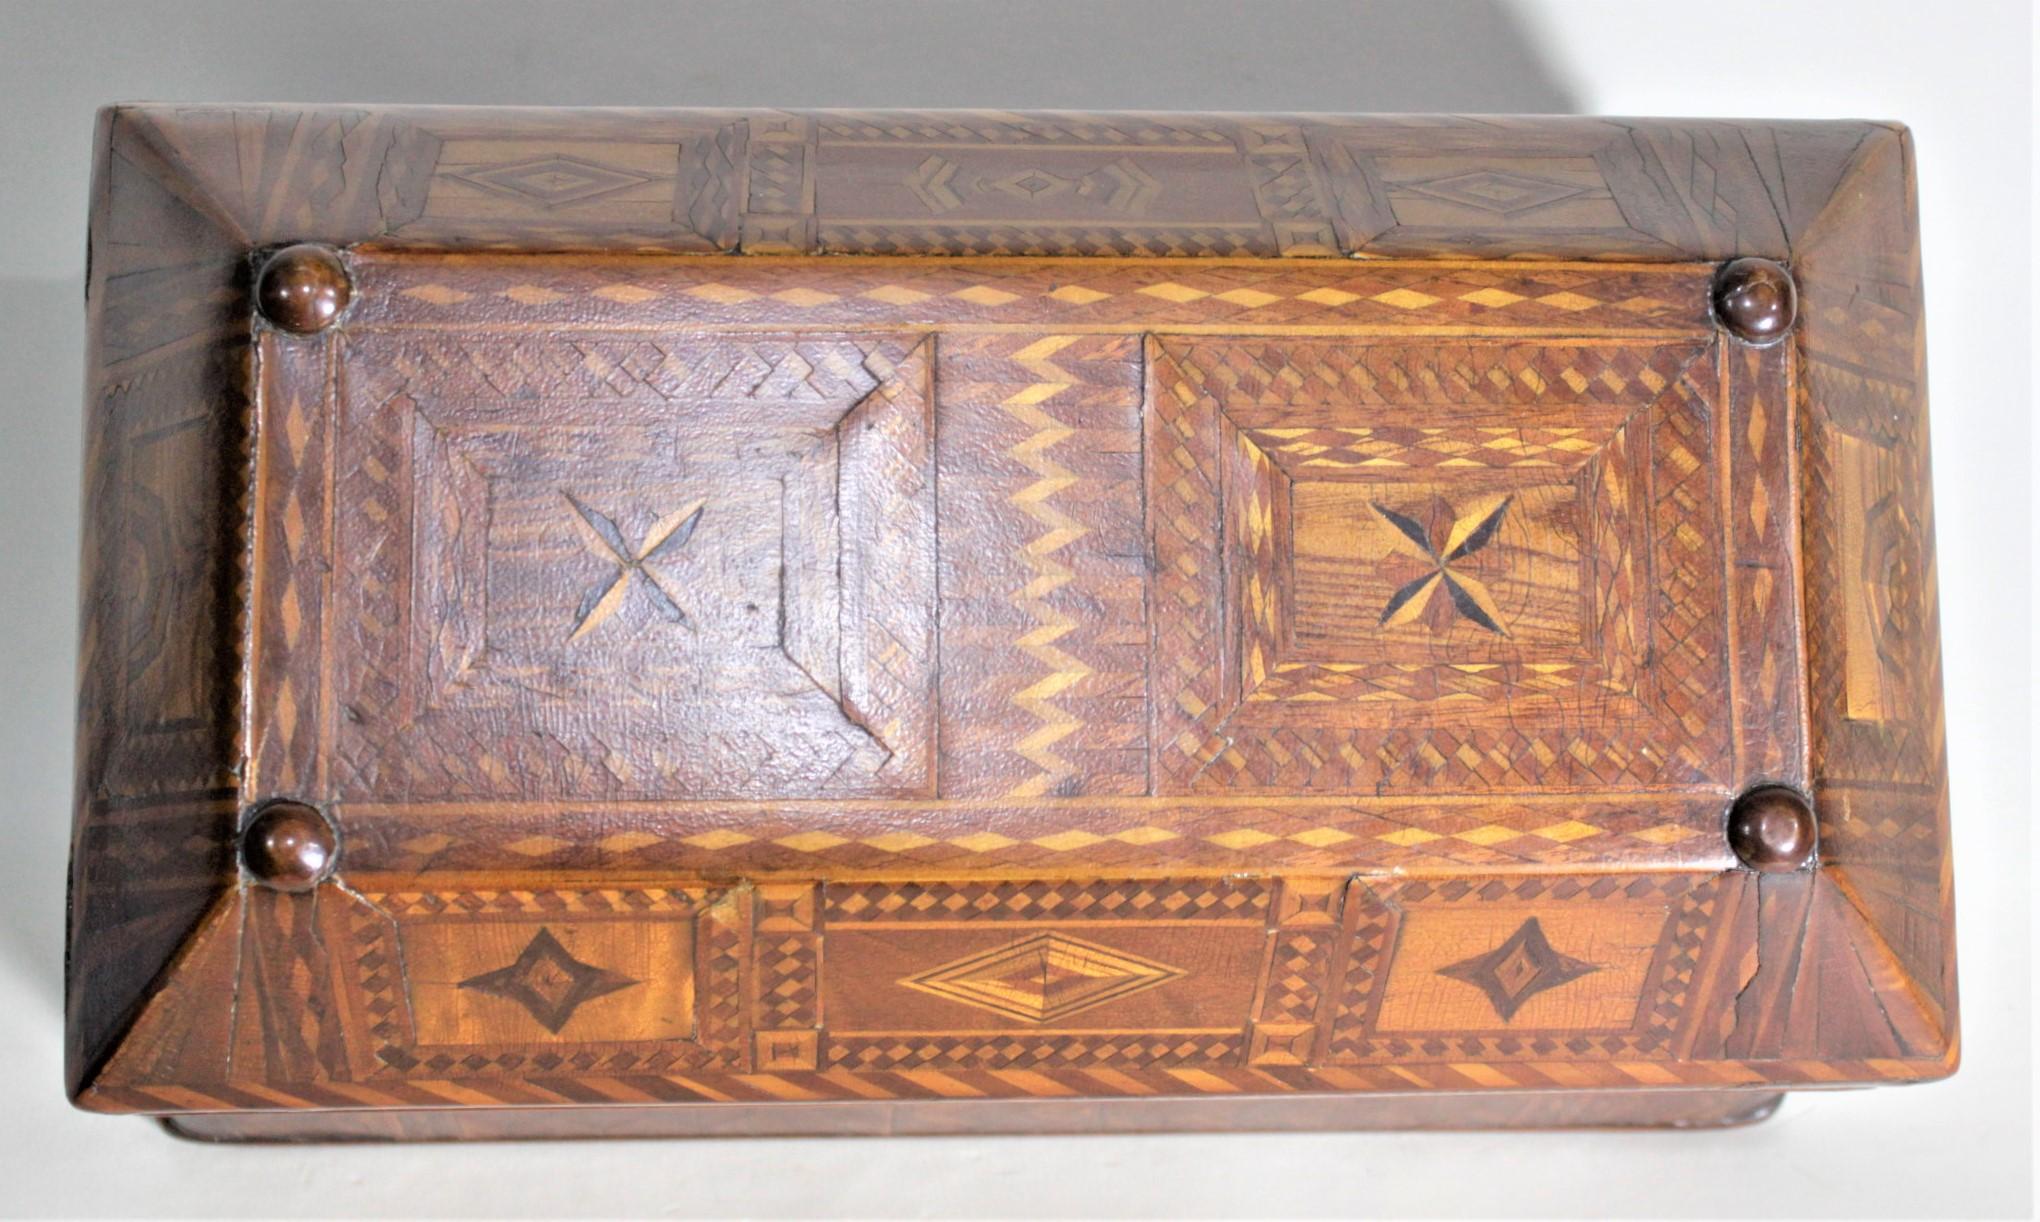 Superb Antique Folk Art Parquetry Casket Styled Writing Box or Lap Desk For Sale 1